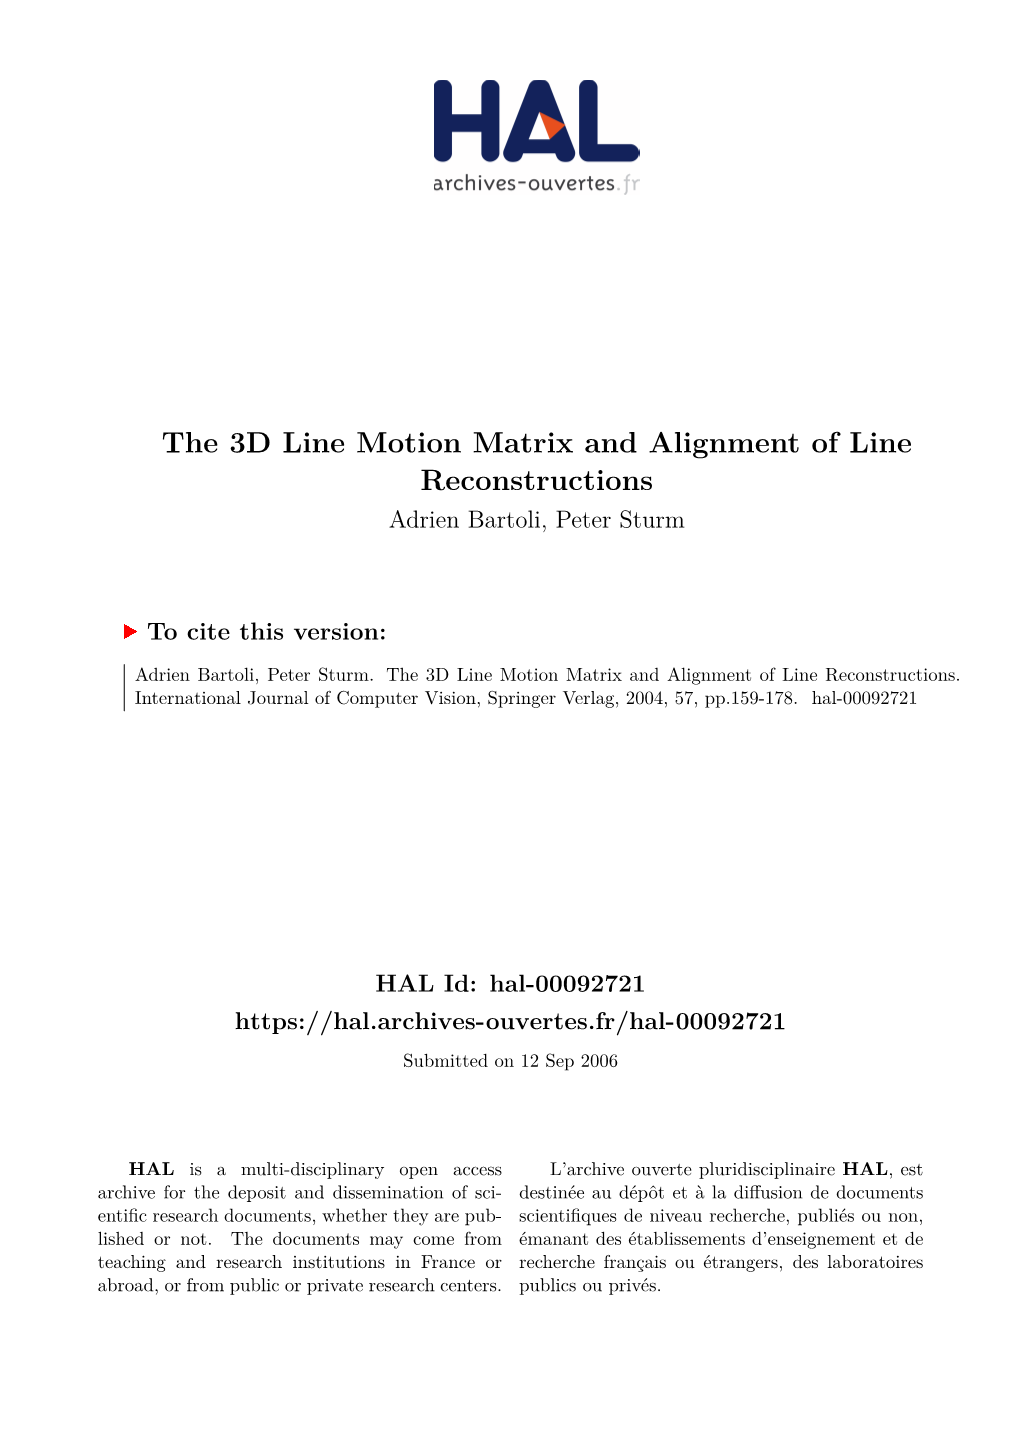 The 3D Line Motion Matrix and Alignment of Line Reconstructions Adrien Bartoli, Peter Sturm